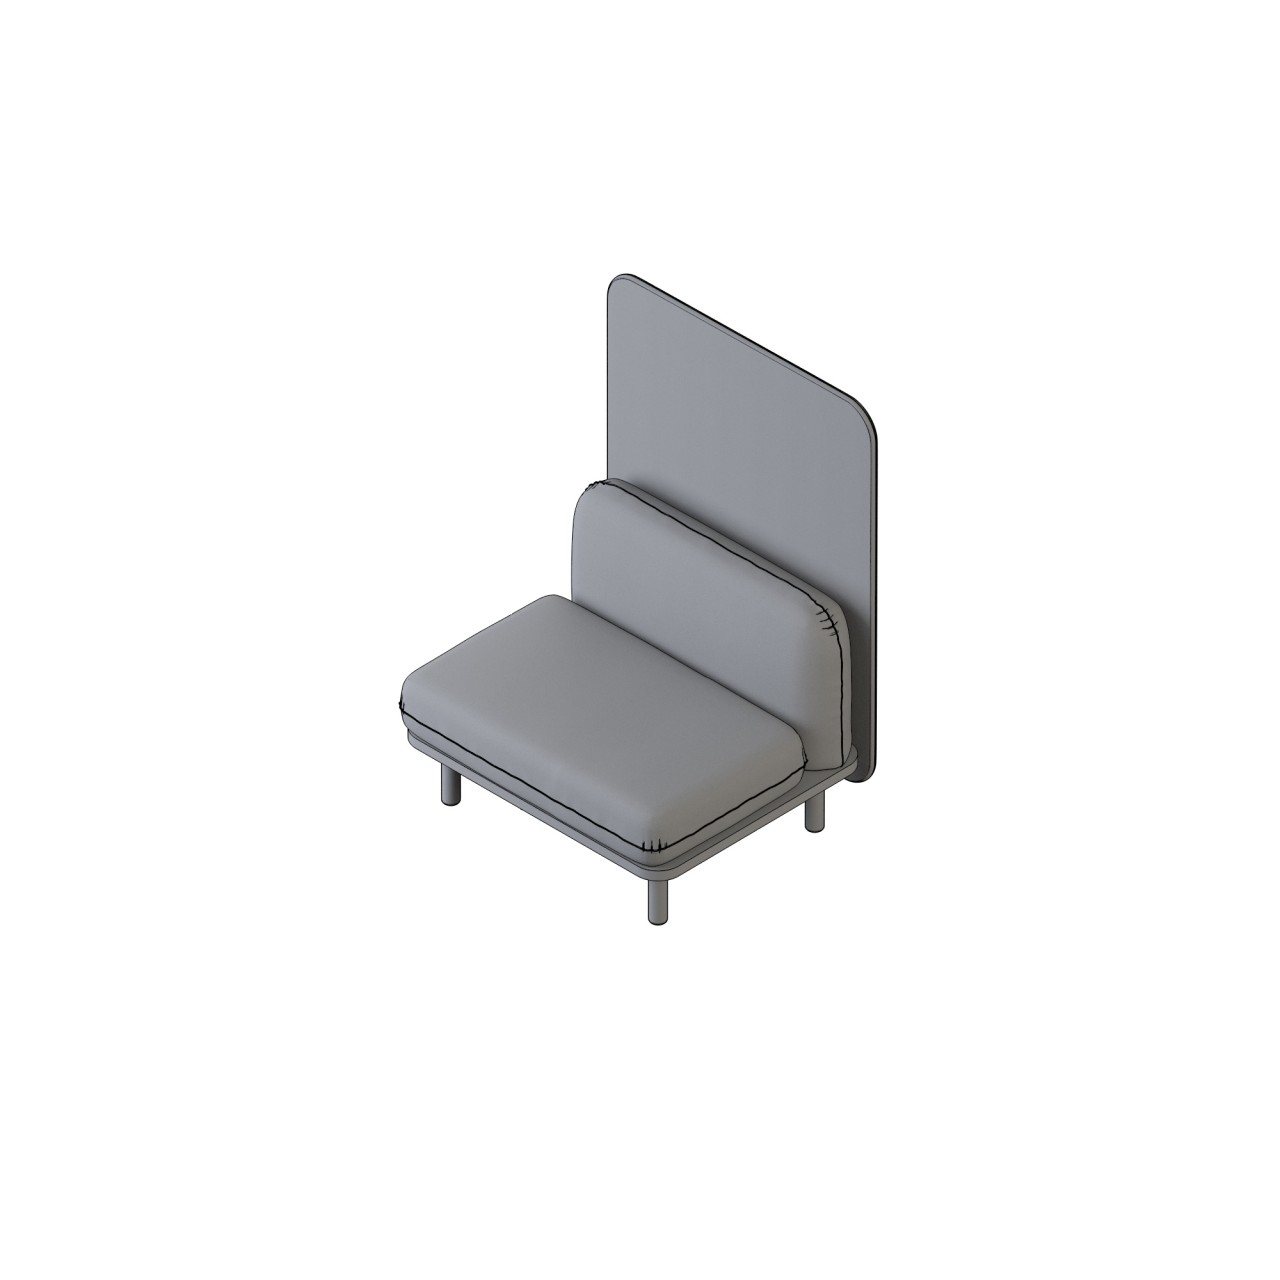 soft - 24003-B
COM 5
(back, 1.75, base 1, seat 2.75, panel 2.75)